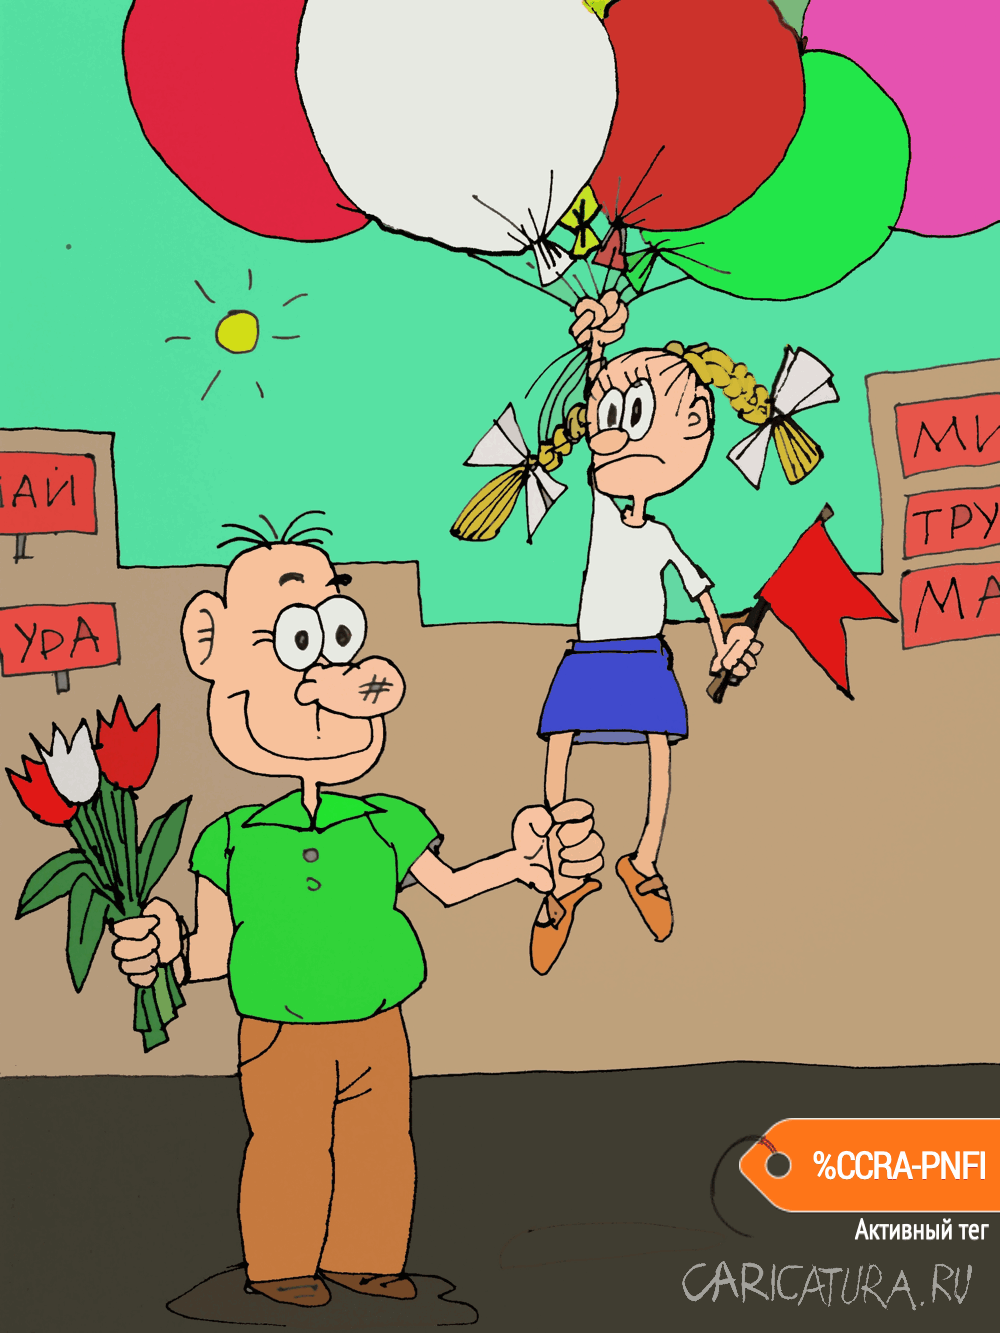 Карикатура "Я с папой на параде", Юрий Величко